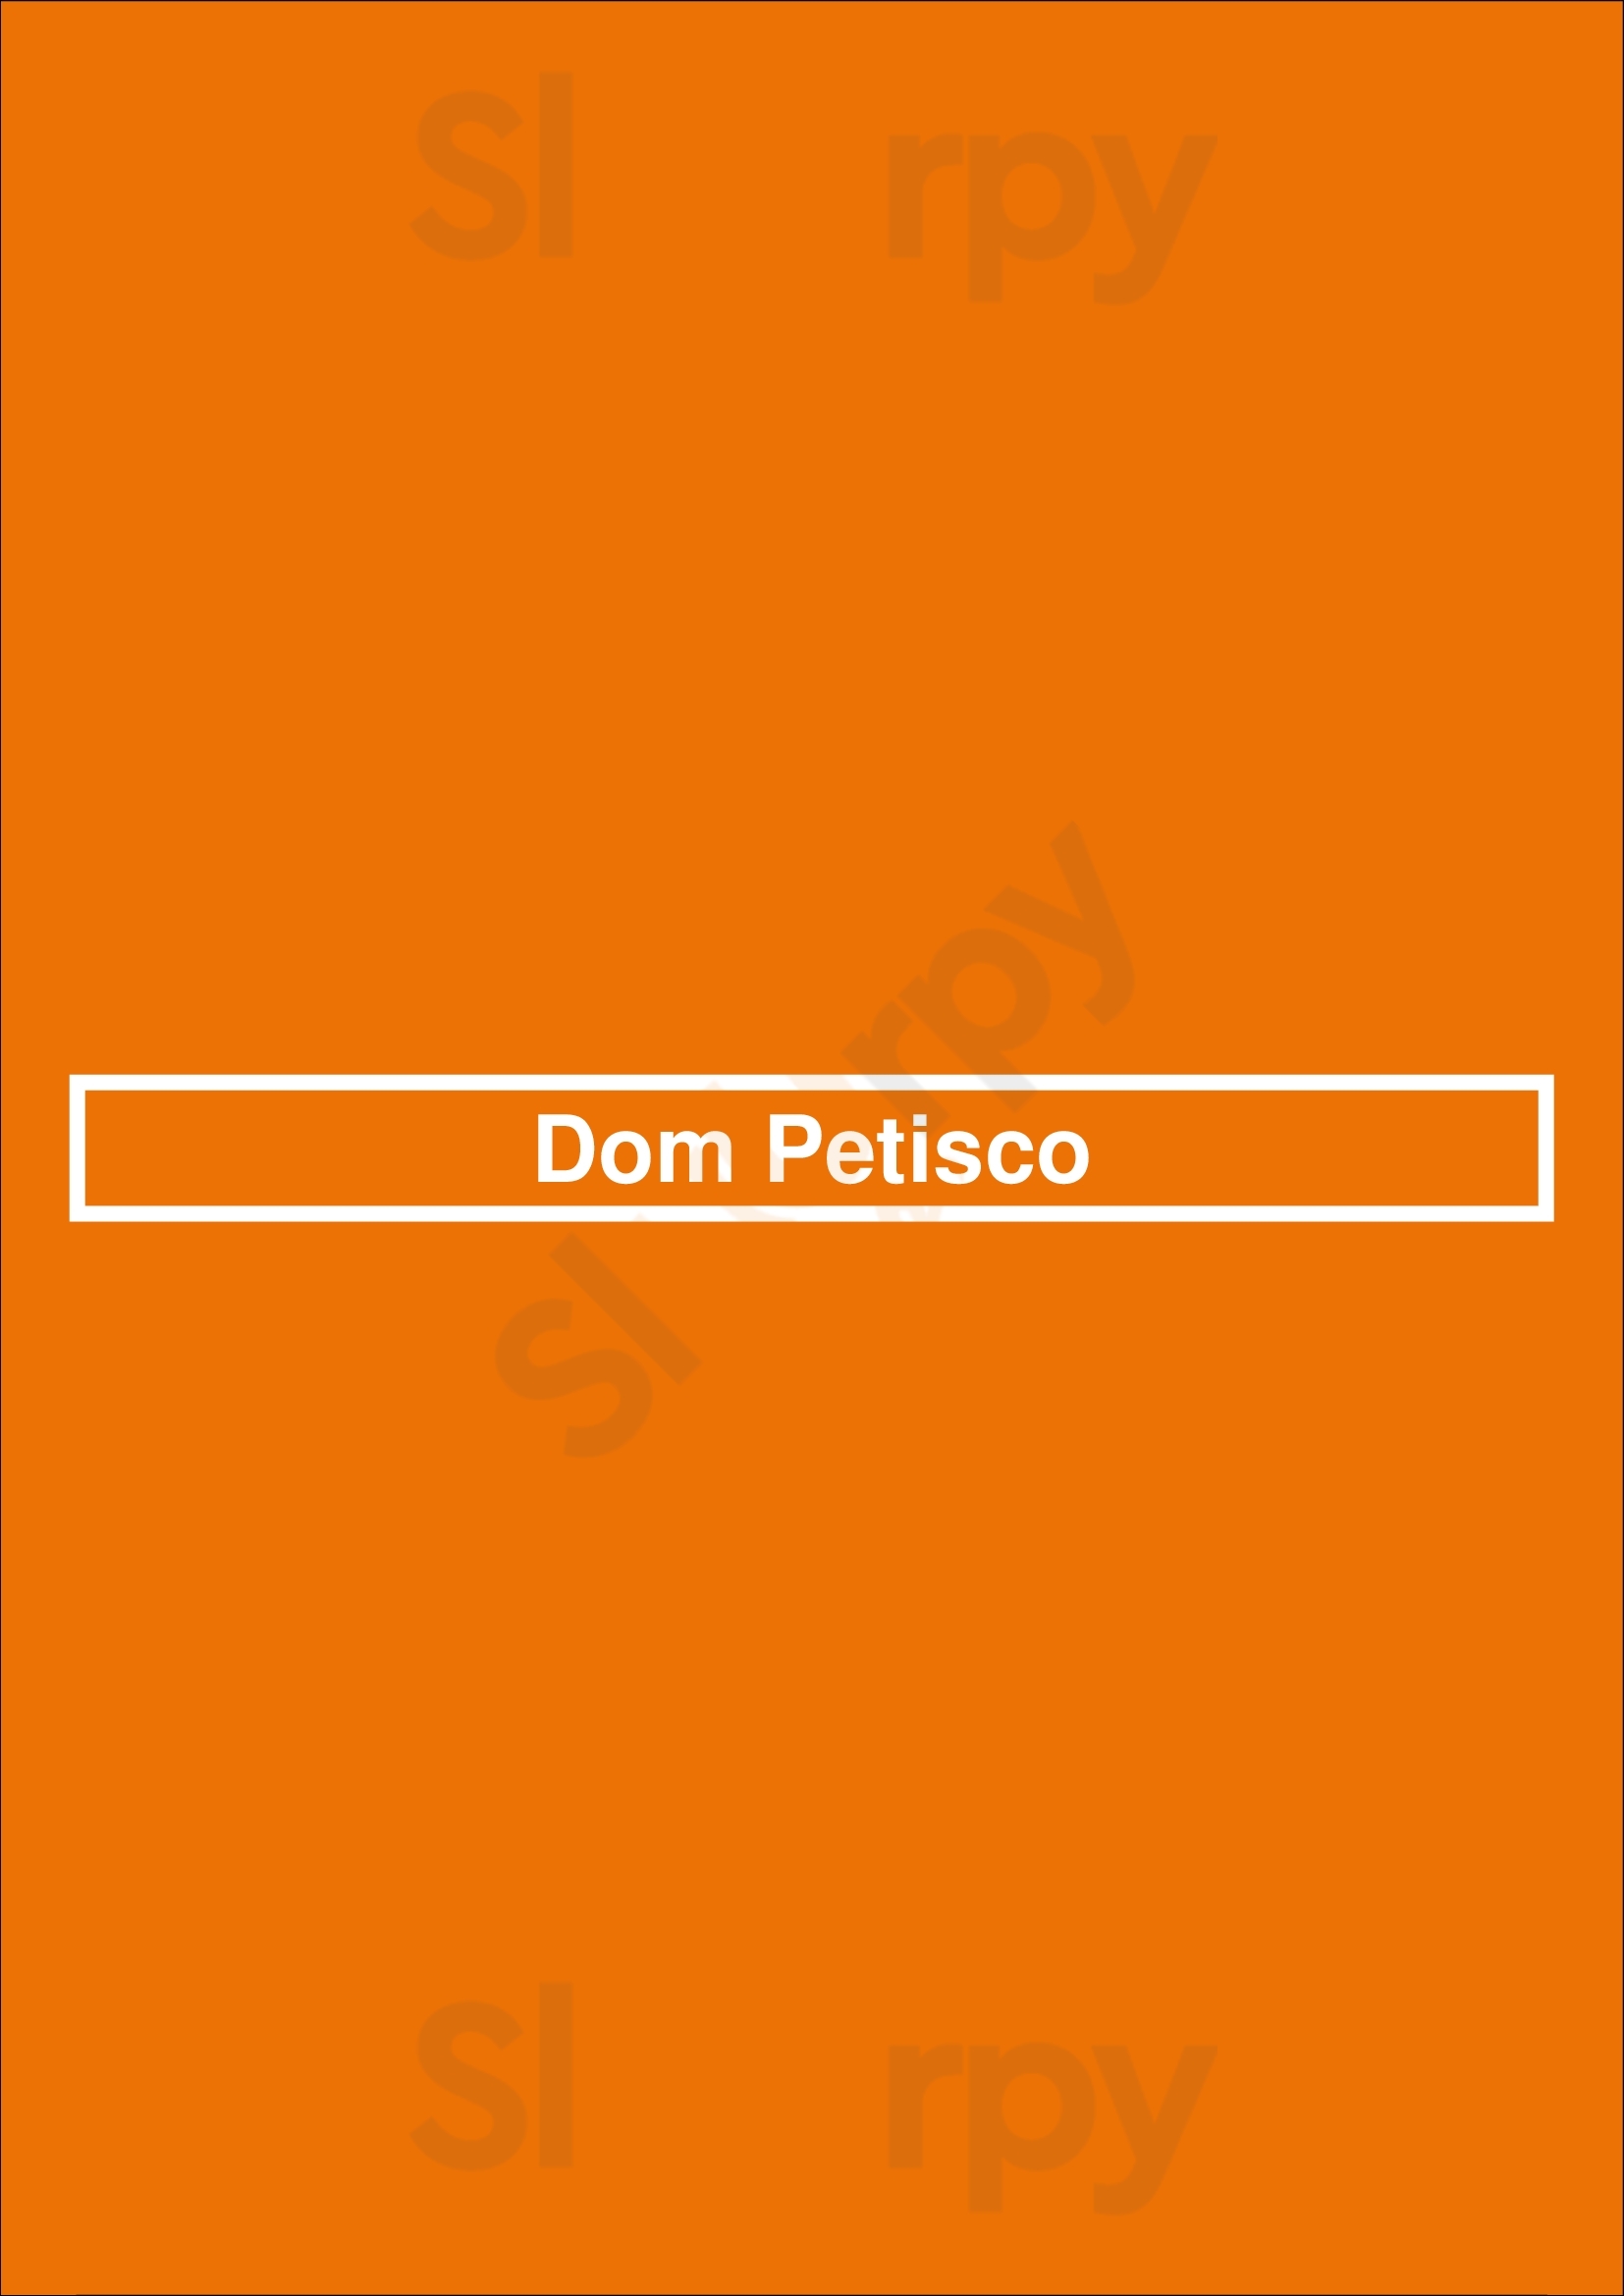 Dom Petisco Lisboa Menu - 1